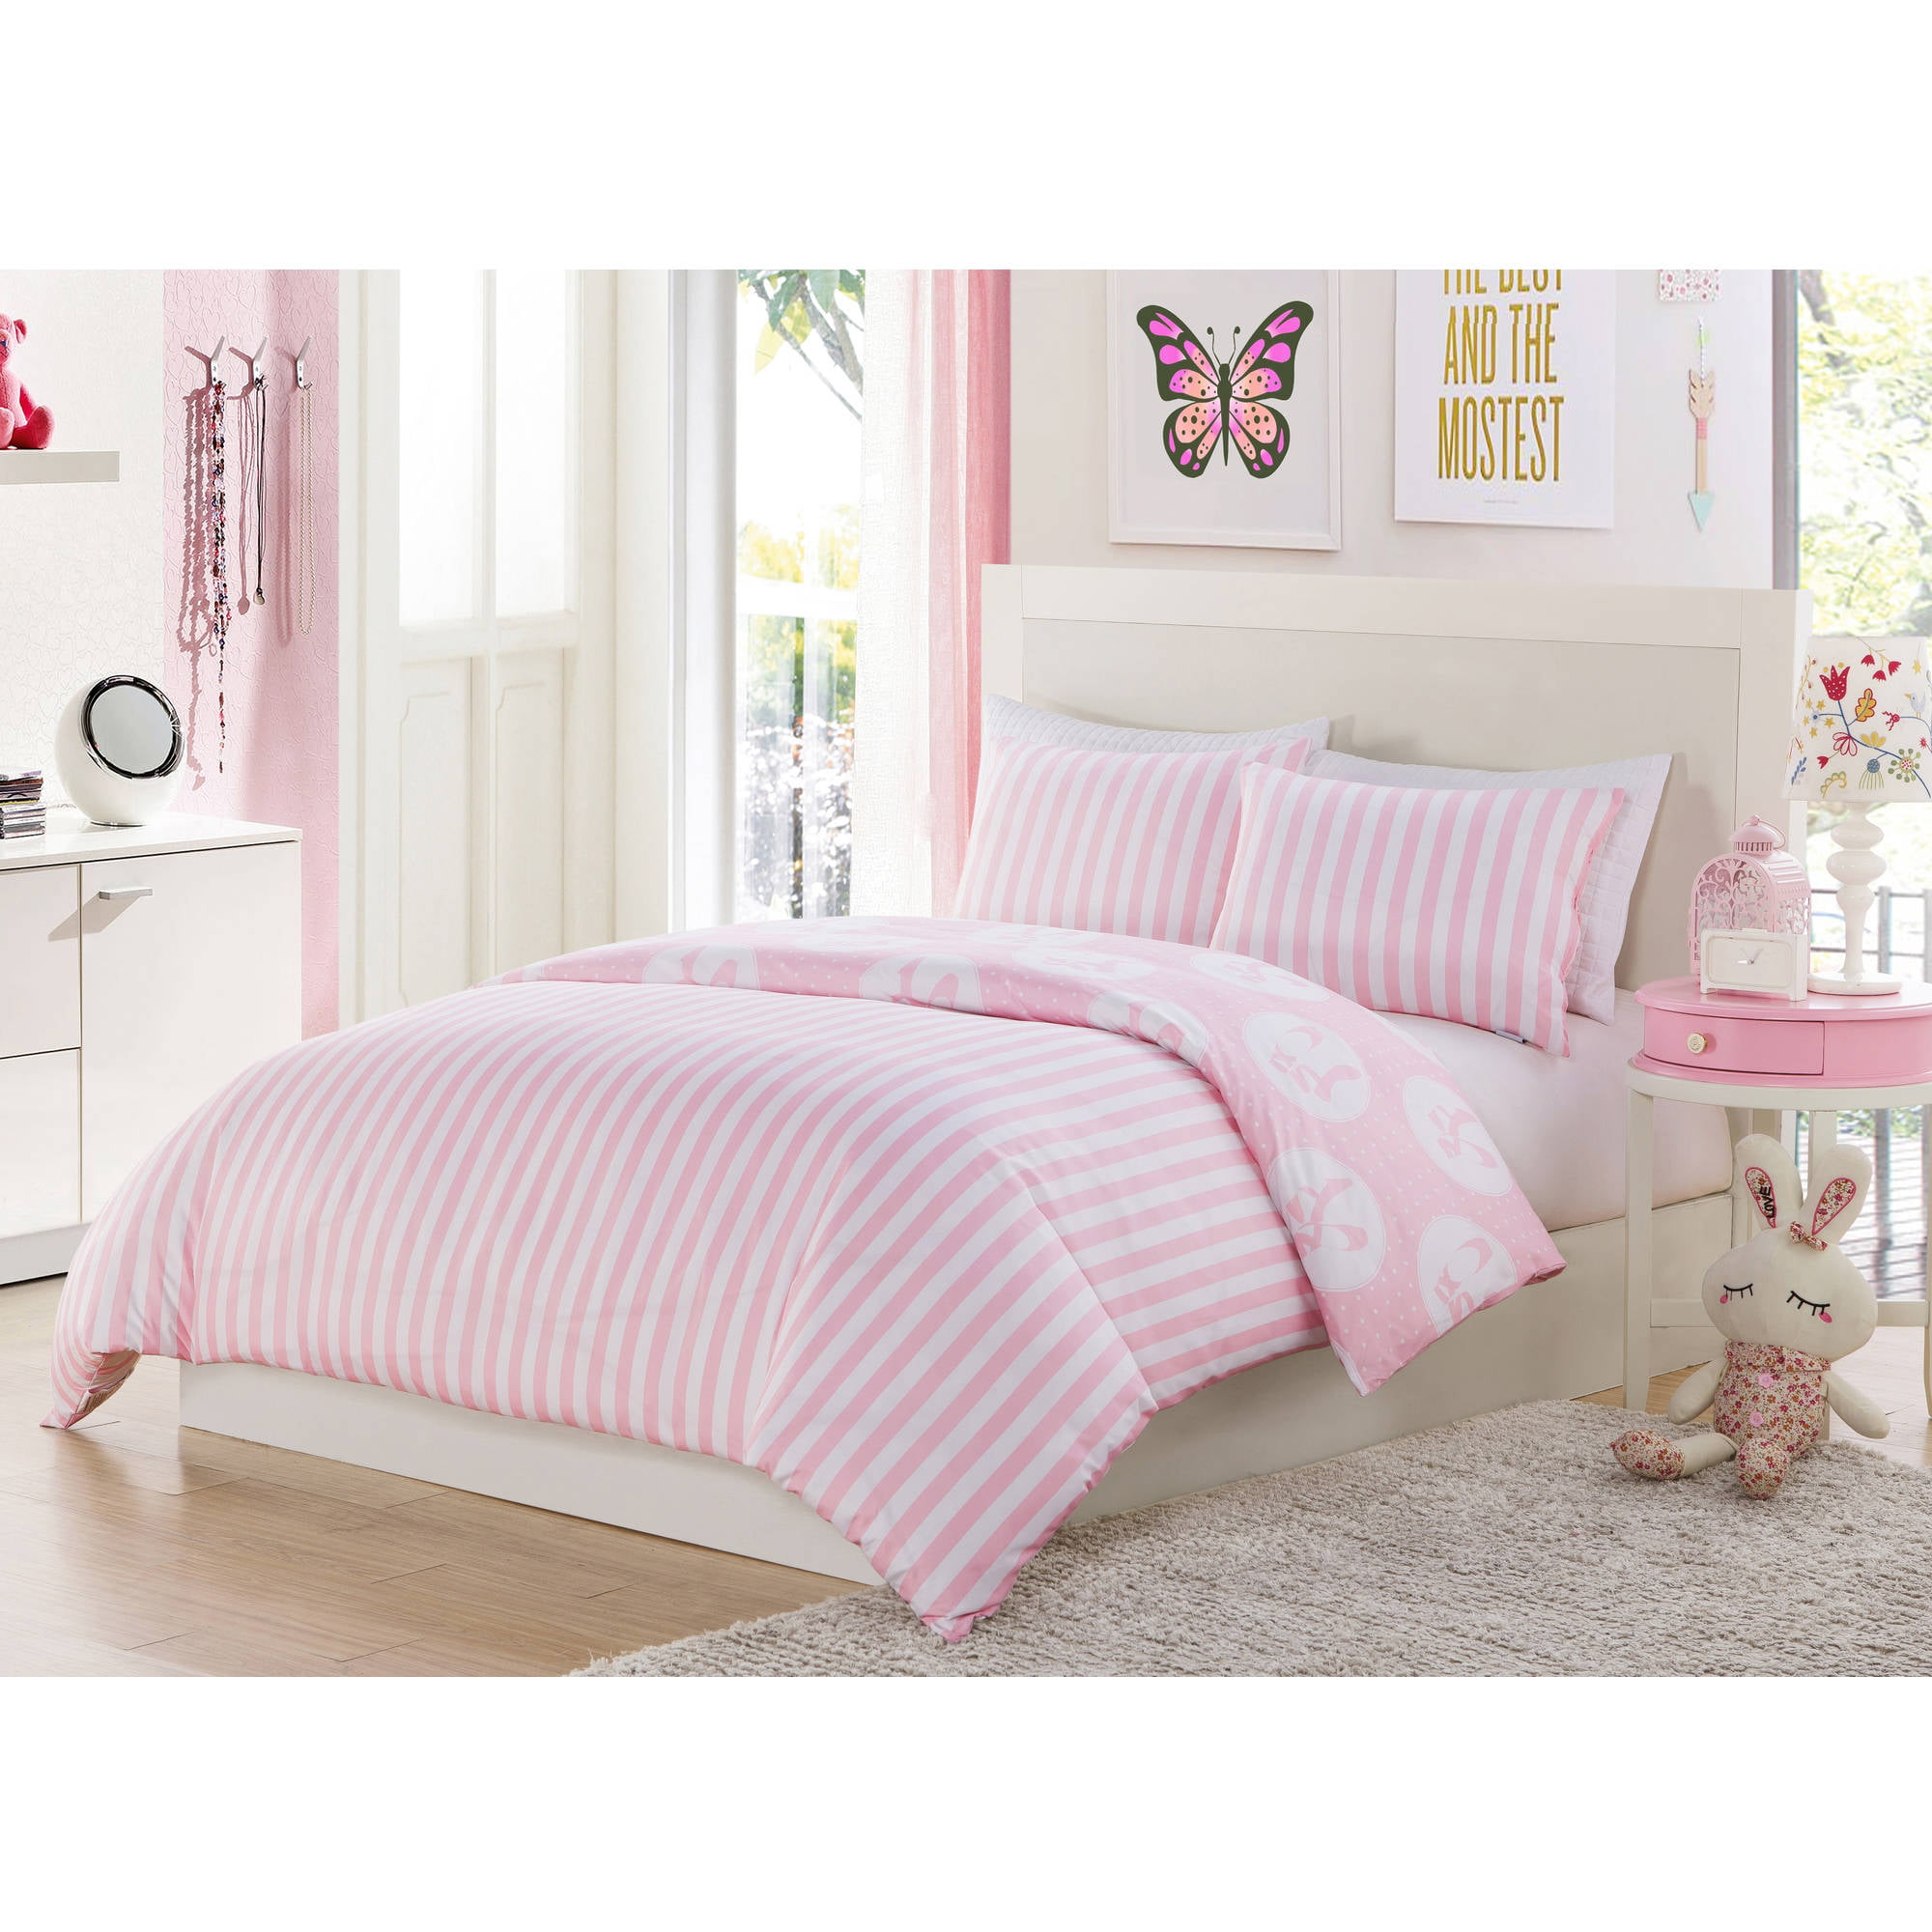 Plie Dot 2 Piece Twin Comforter Set in Pink - Walmart.com